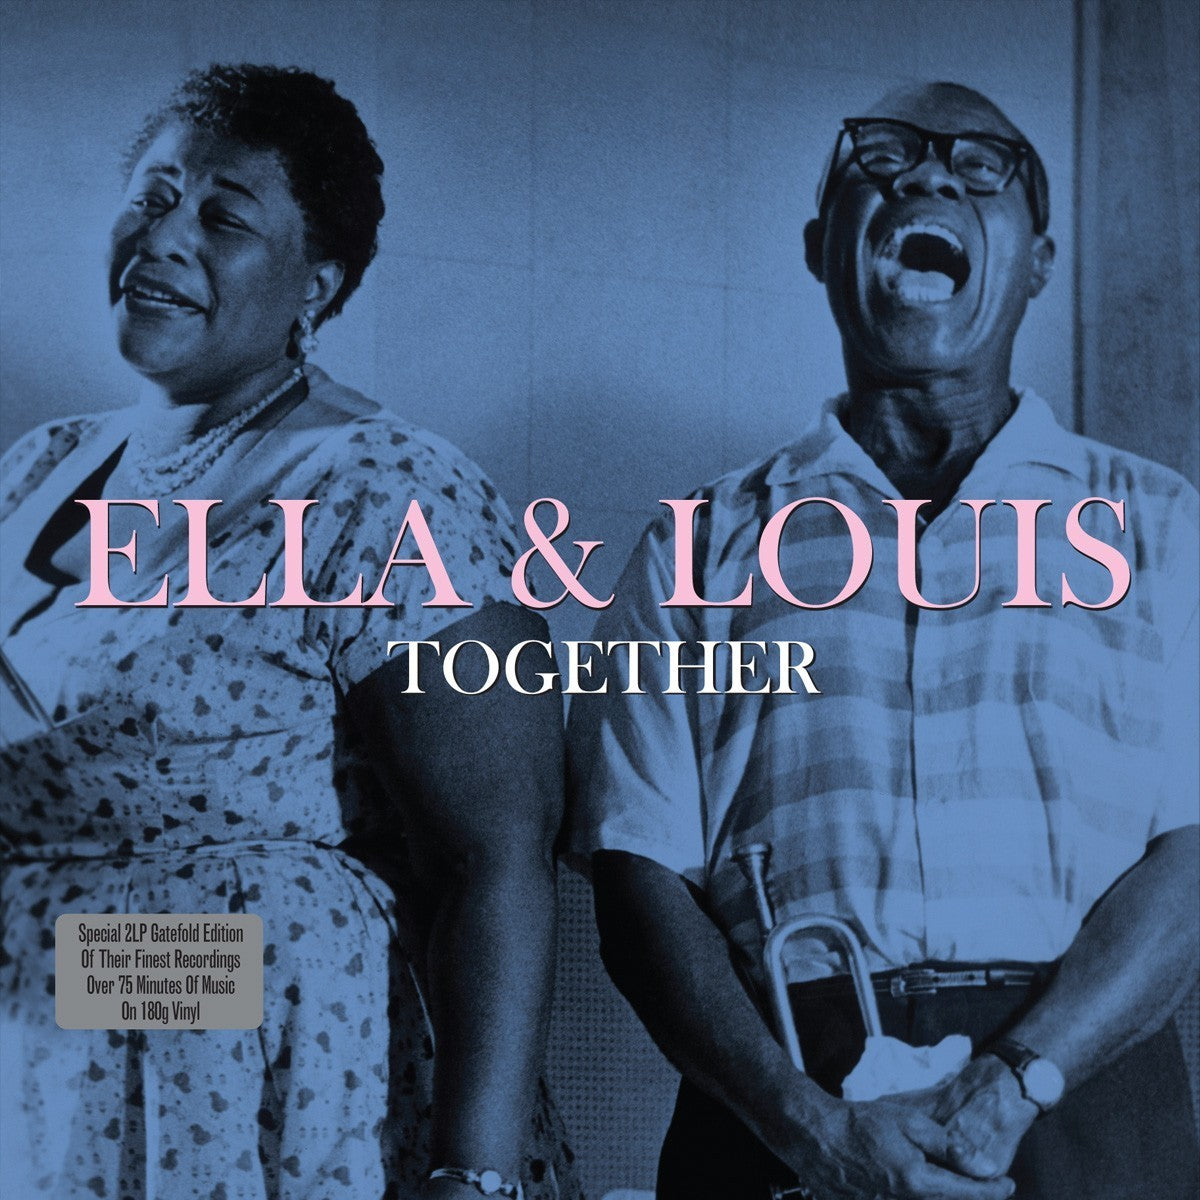 Ella Fitzgerald & Louis Armstrong Ella & Louis Together 2 x LP SET (NOT NOW)